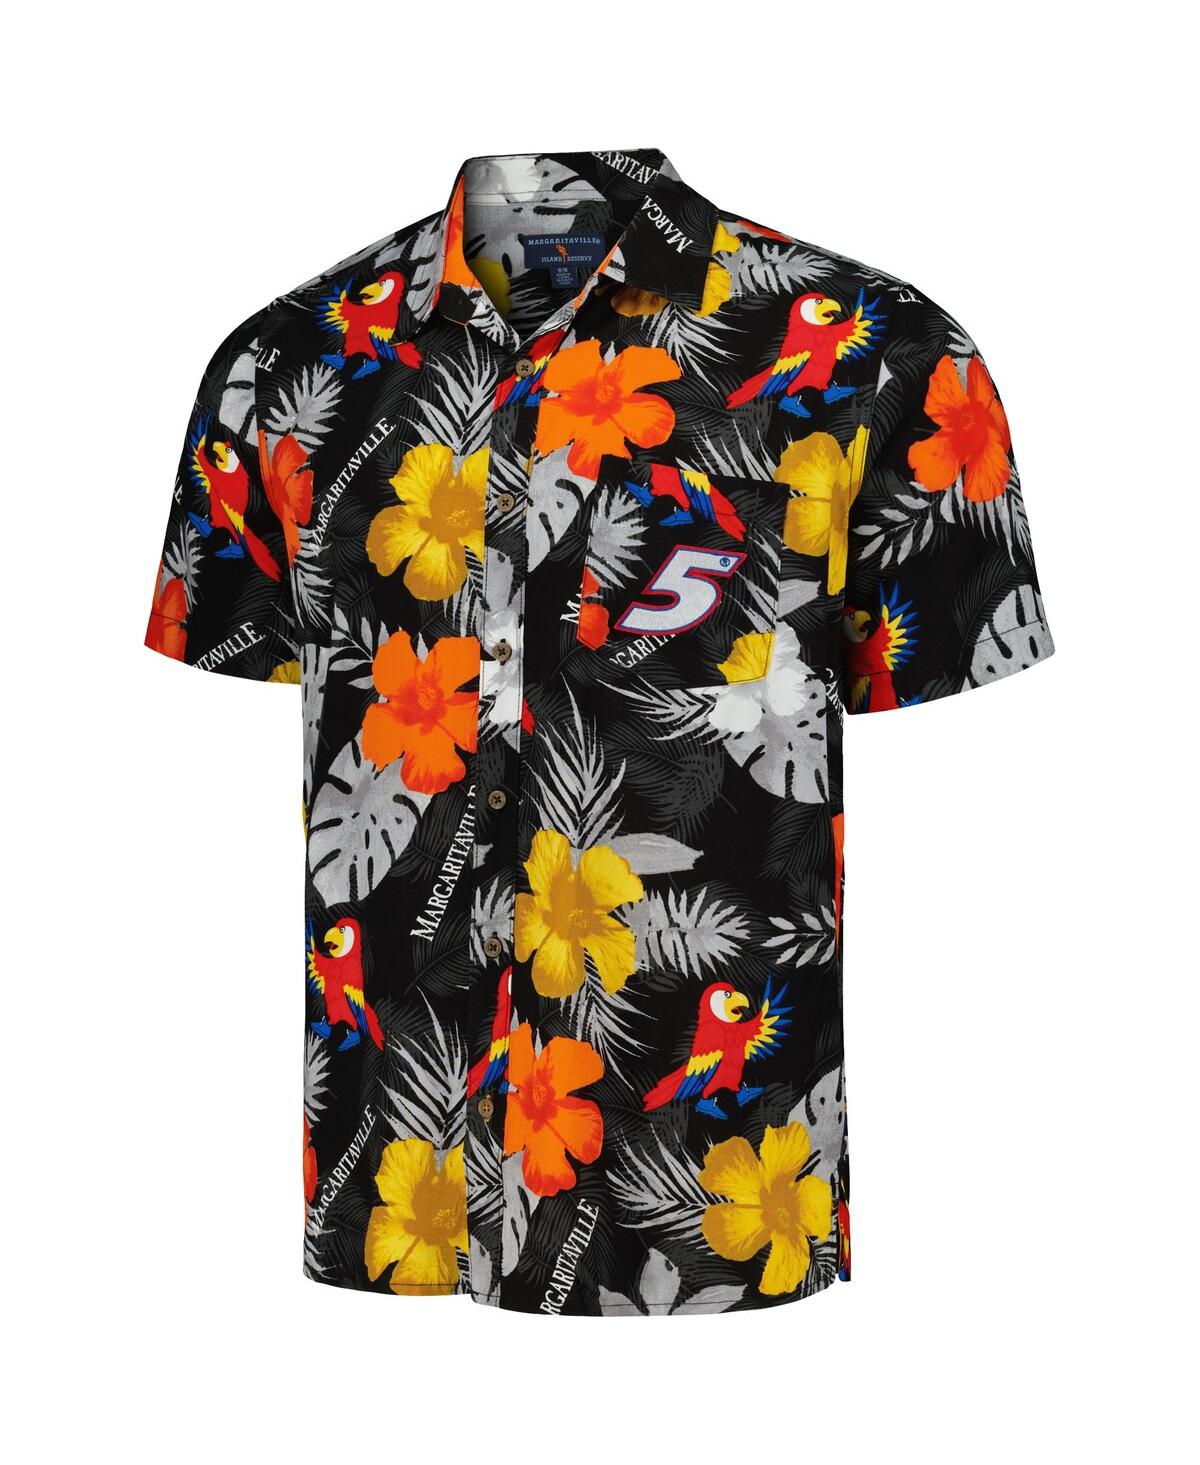 Shop Margaritaville Men's  Black Kyle Larson Island Life Floral Party Full-button Shirt